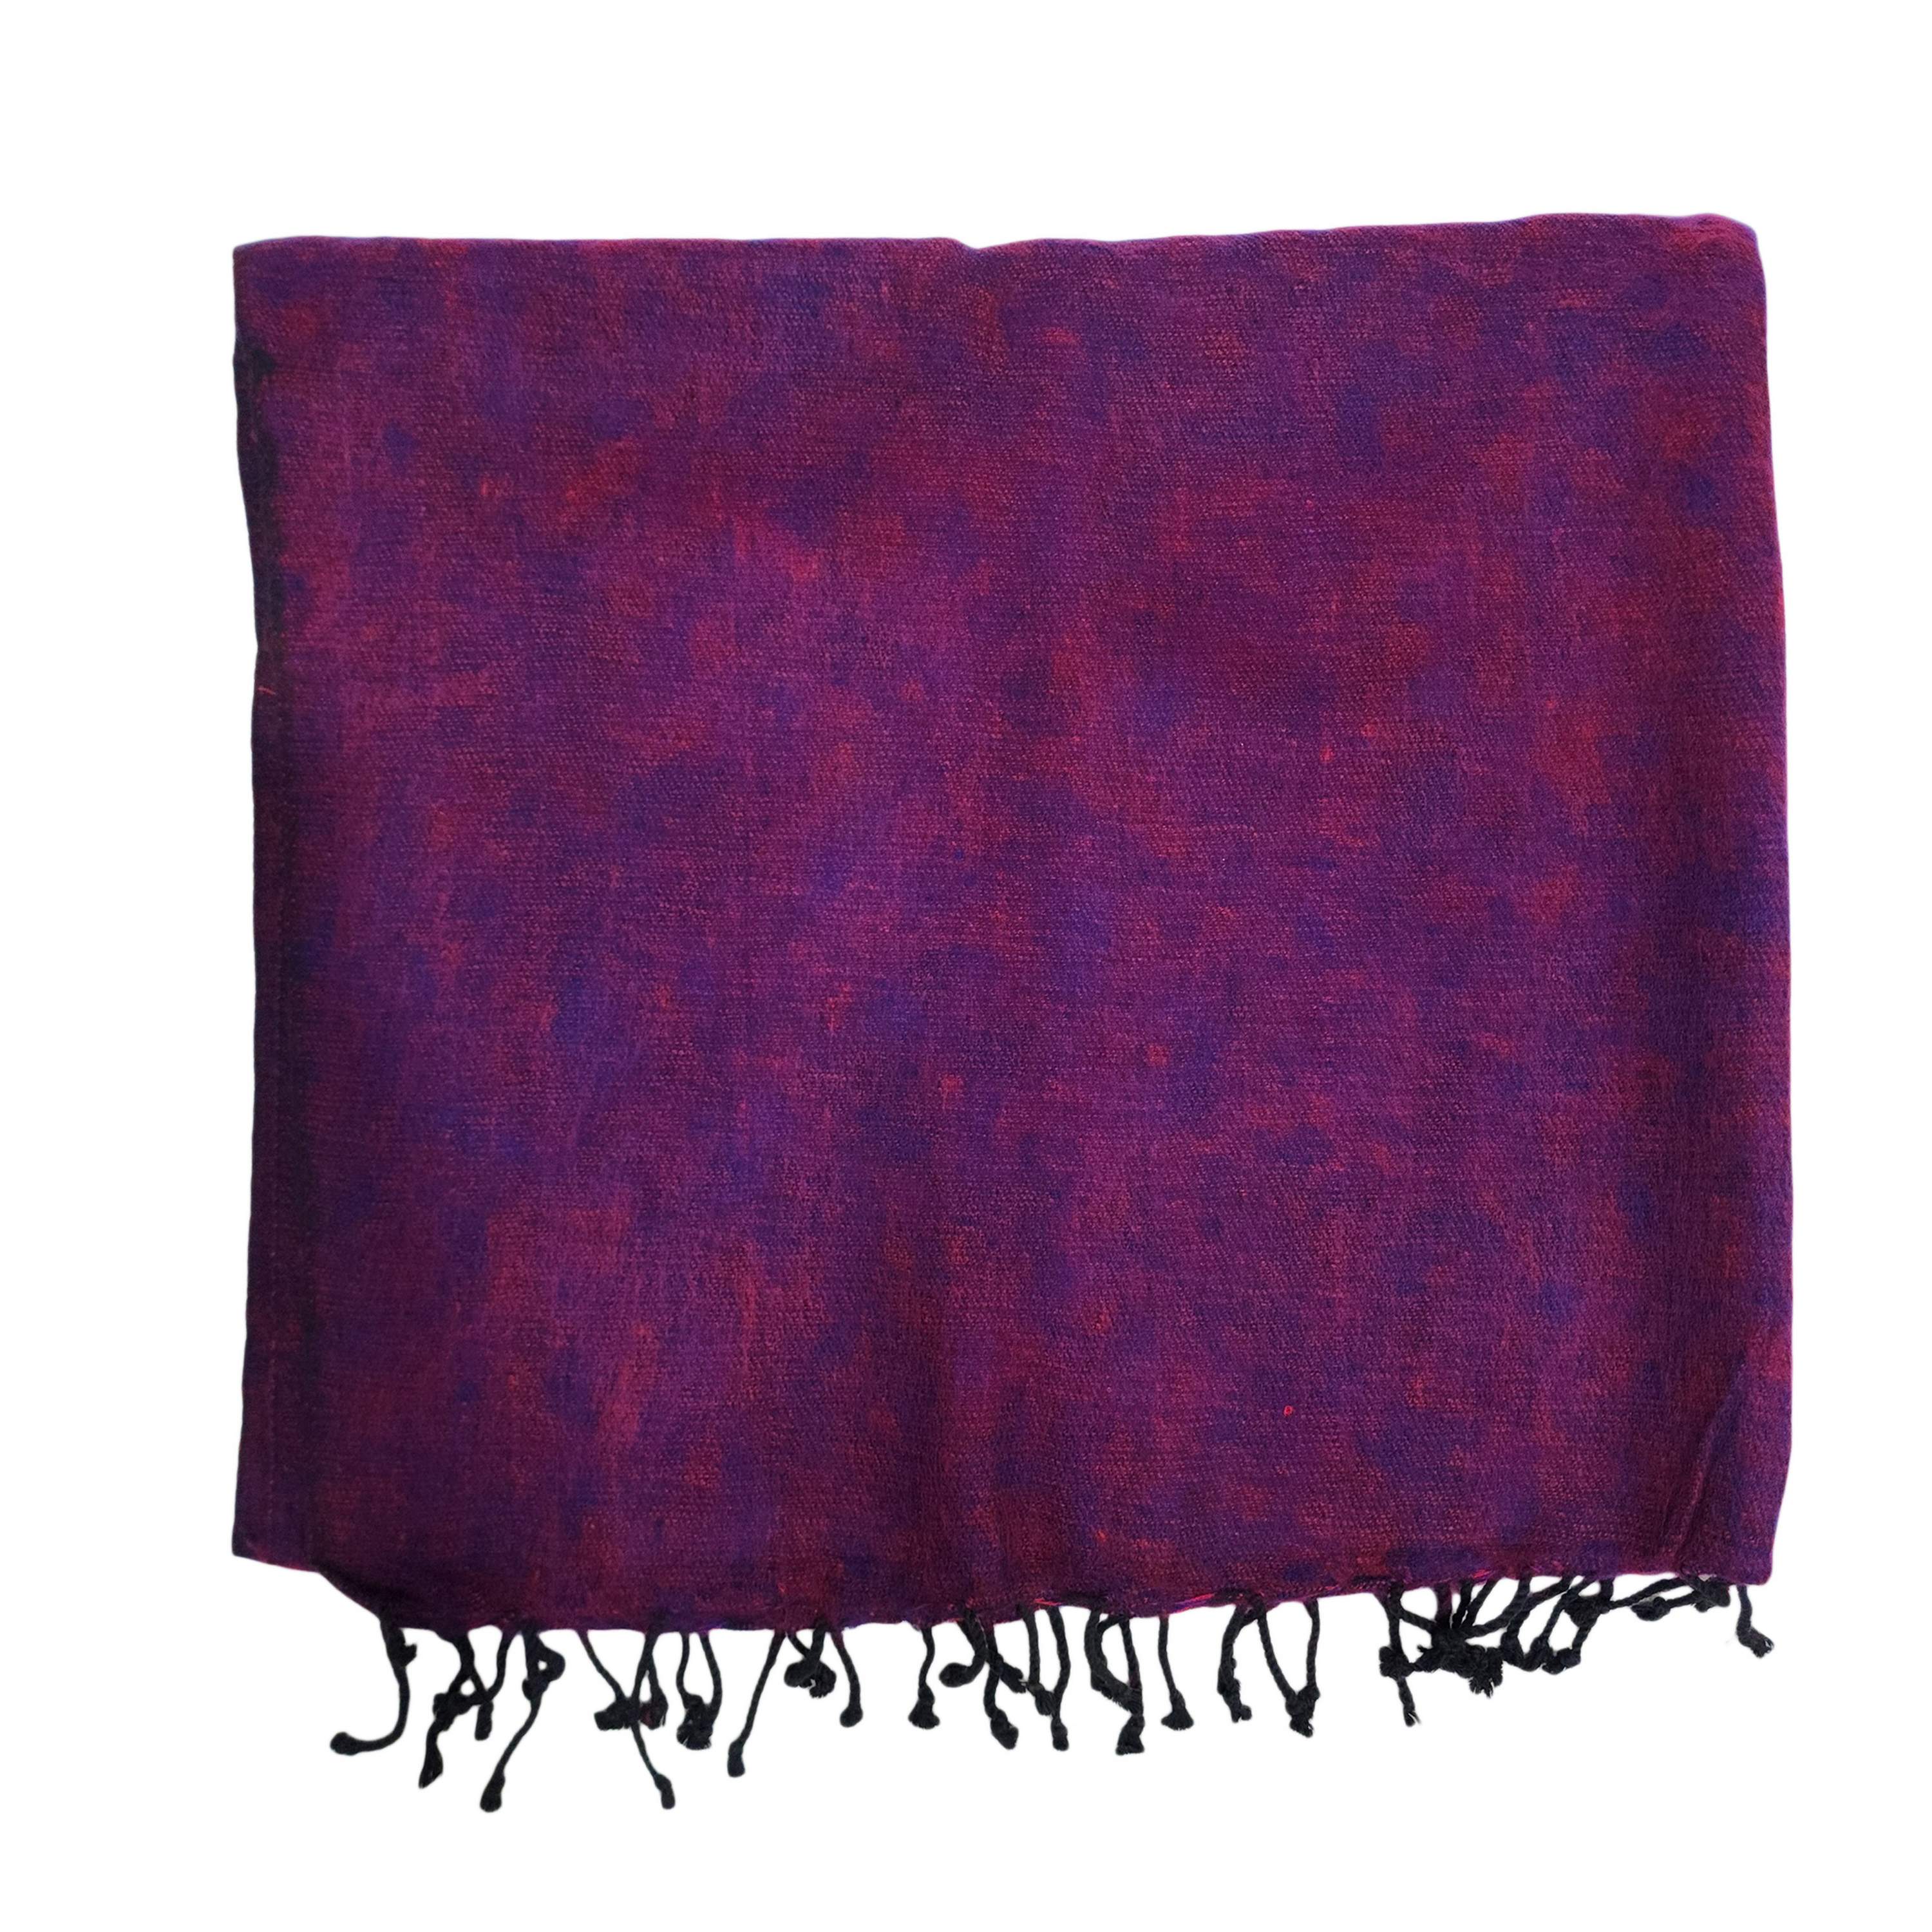 Yak Wool Blanket, Nepali Acrylic Hand Loom Blanket, Color burgundy